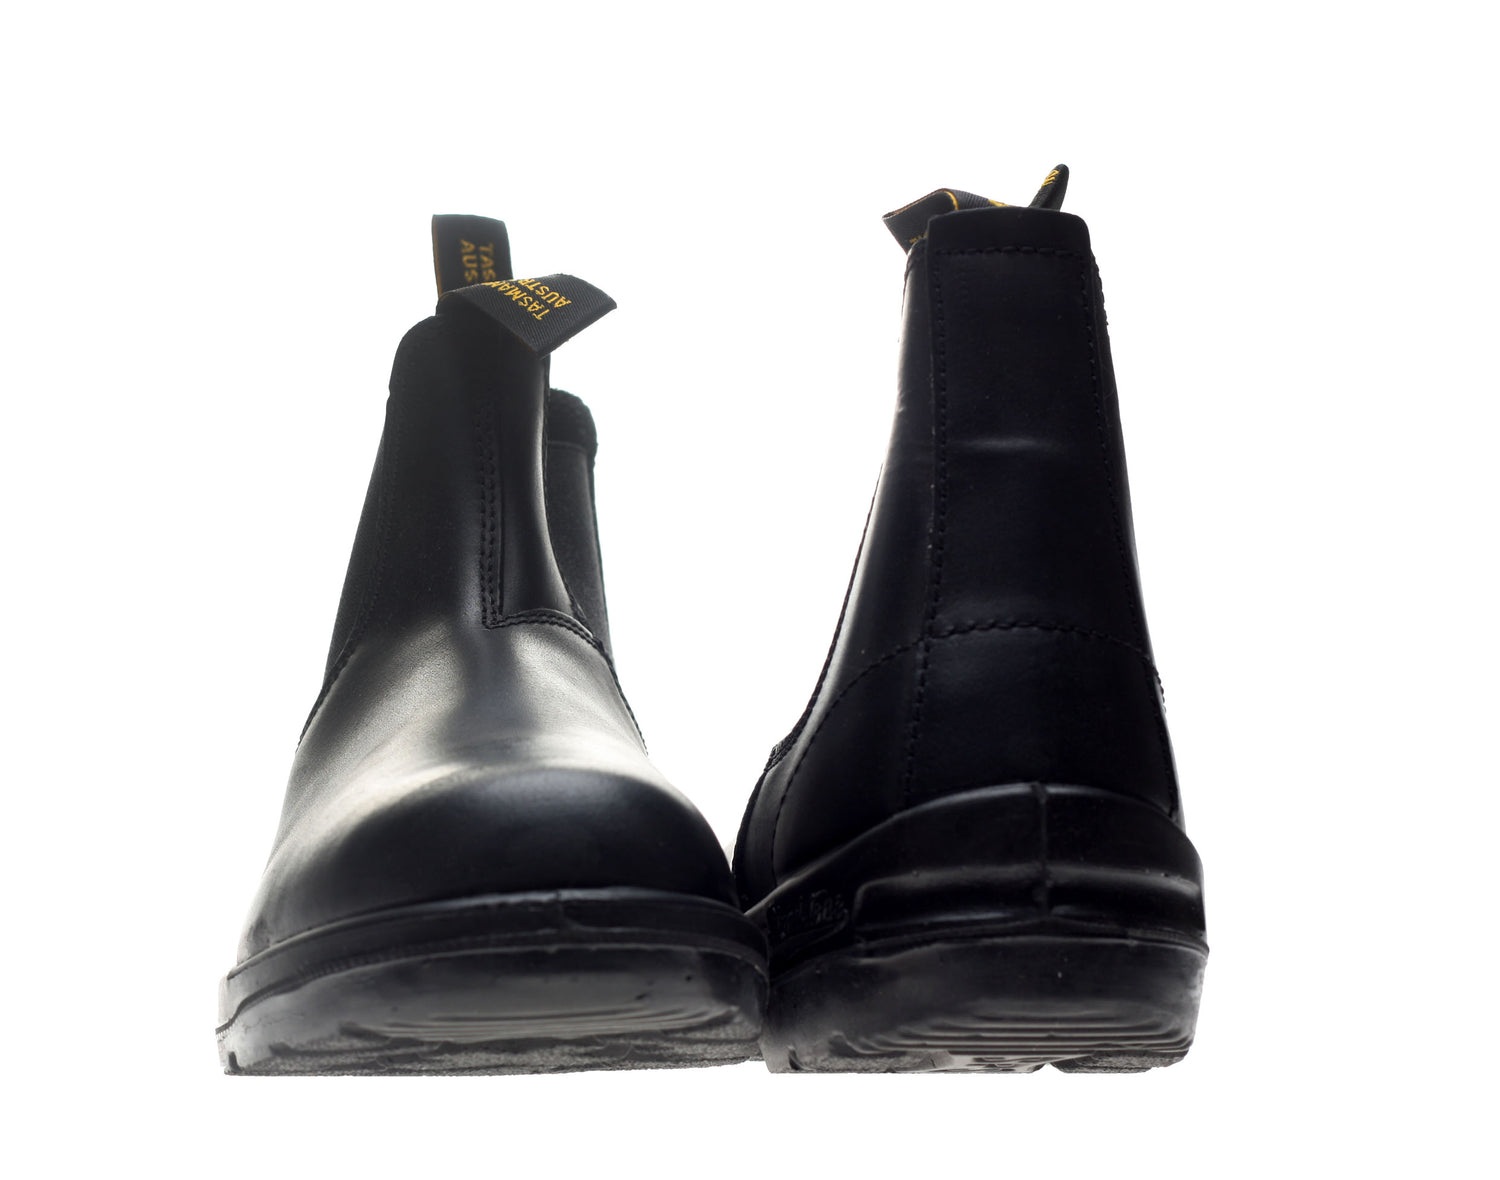 Blundstone 413 Black Non-Safty Men's Chelsea Boots